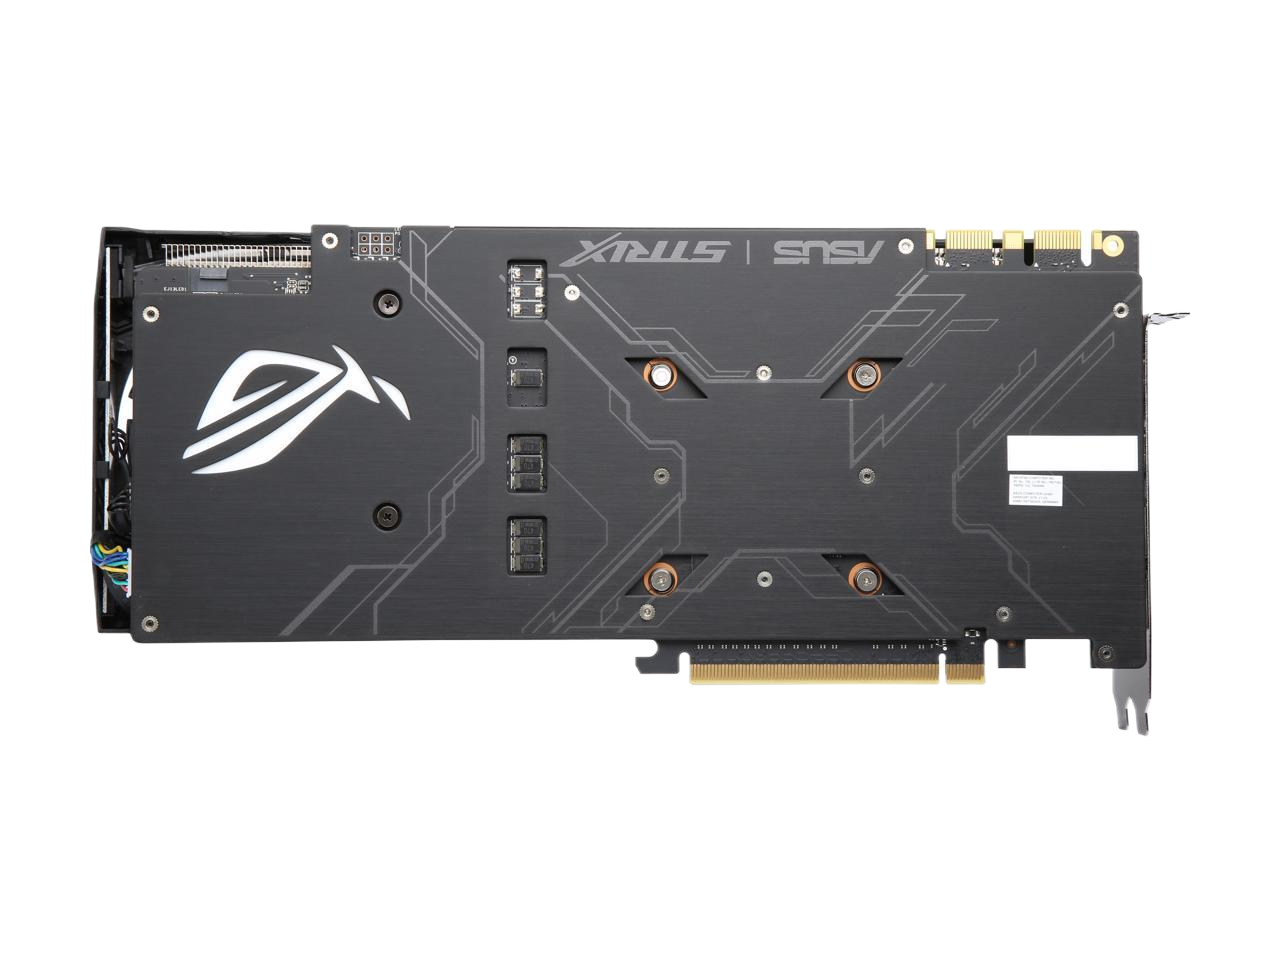 ASUS ROG GeForce GTX 1070 8GB GDDR5 PCI Express 3.0 Video Card with RGB Lighting STRIX-GTX1070-O8G-GAMING